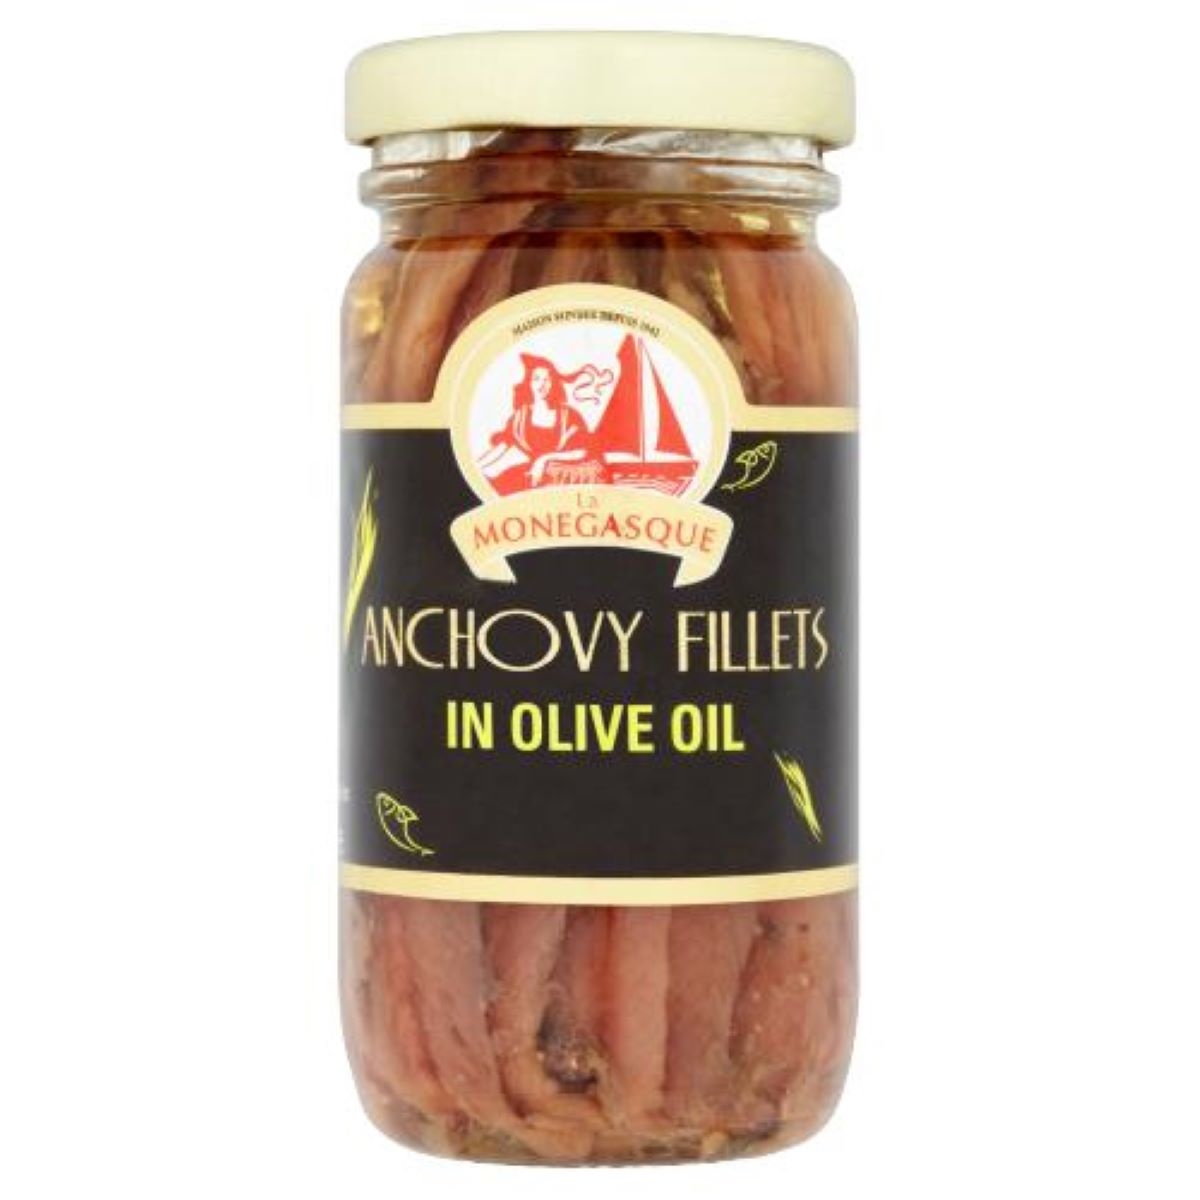 La Monegasque Anchovy Fillets In Olive Oil 100g